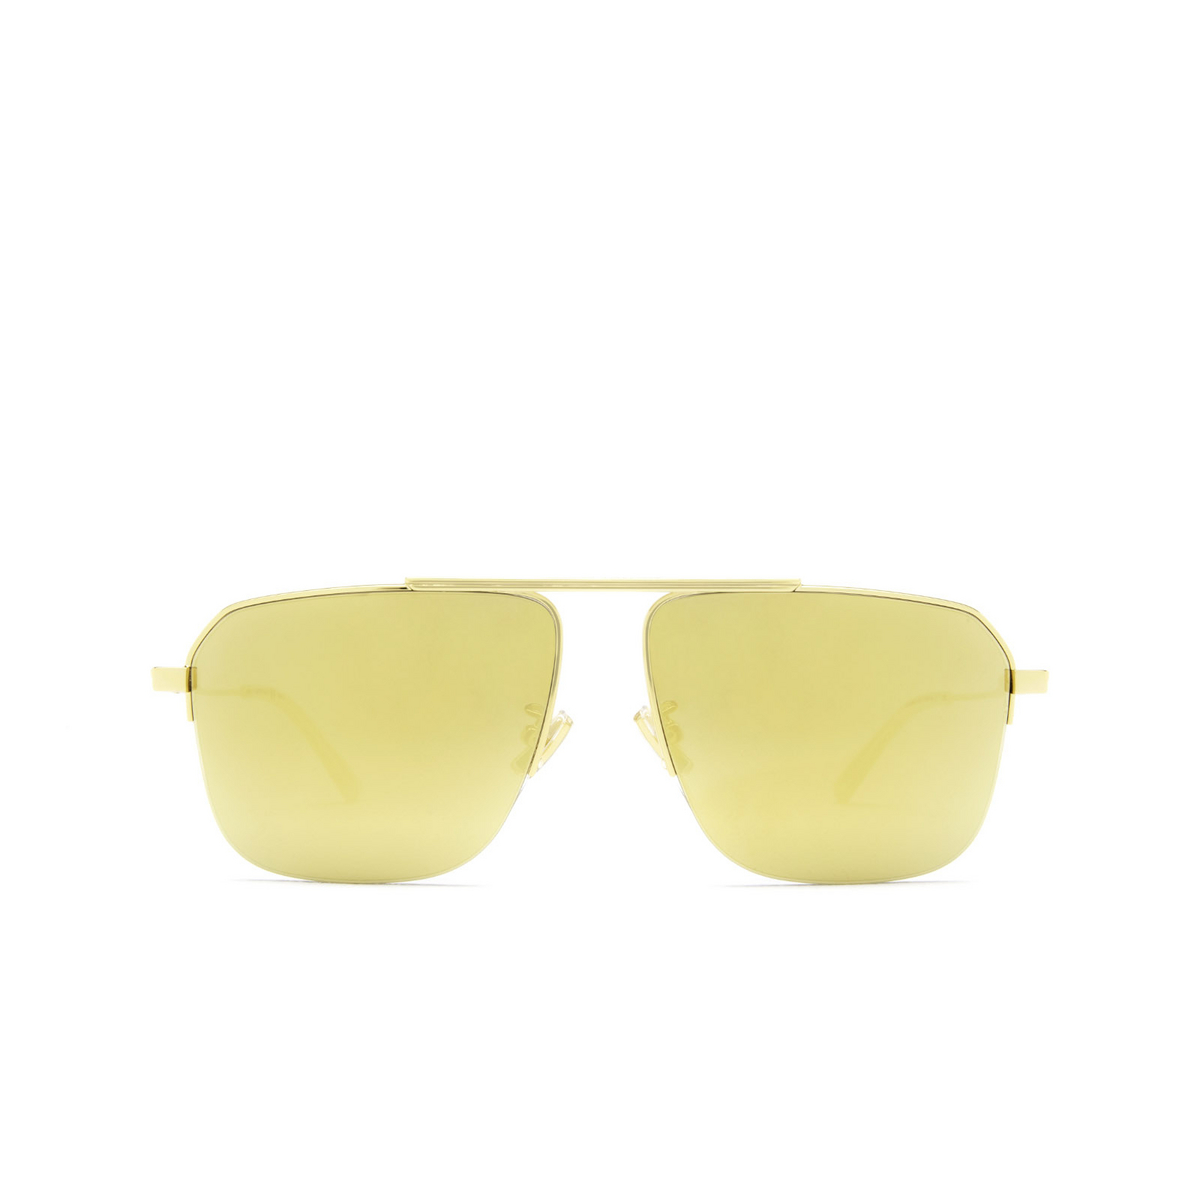 Bottega Veneta® Square Sunglasses: BV1149S color Gold 005 - front view.